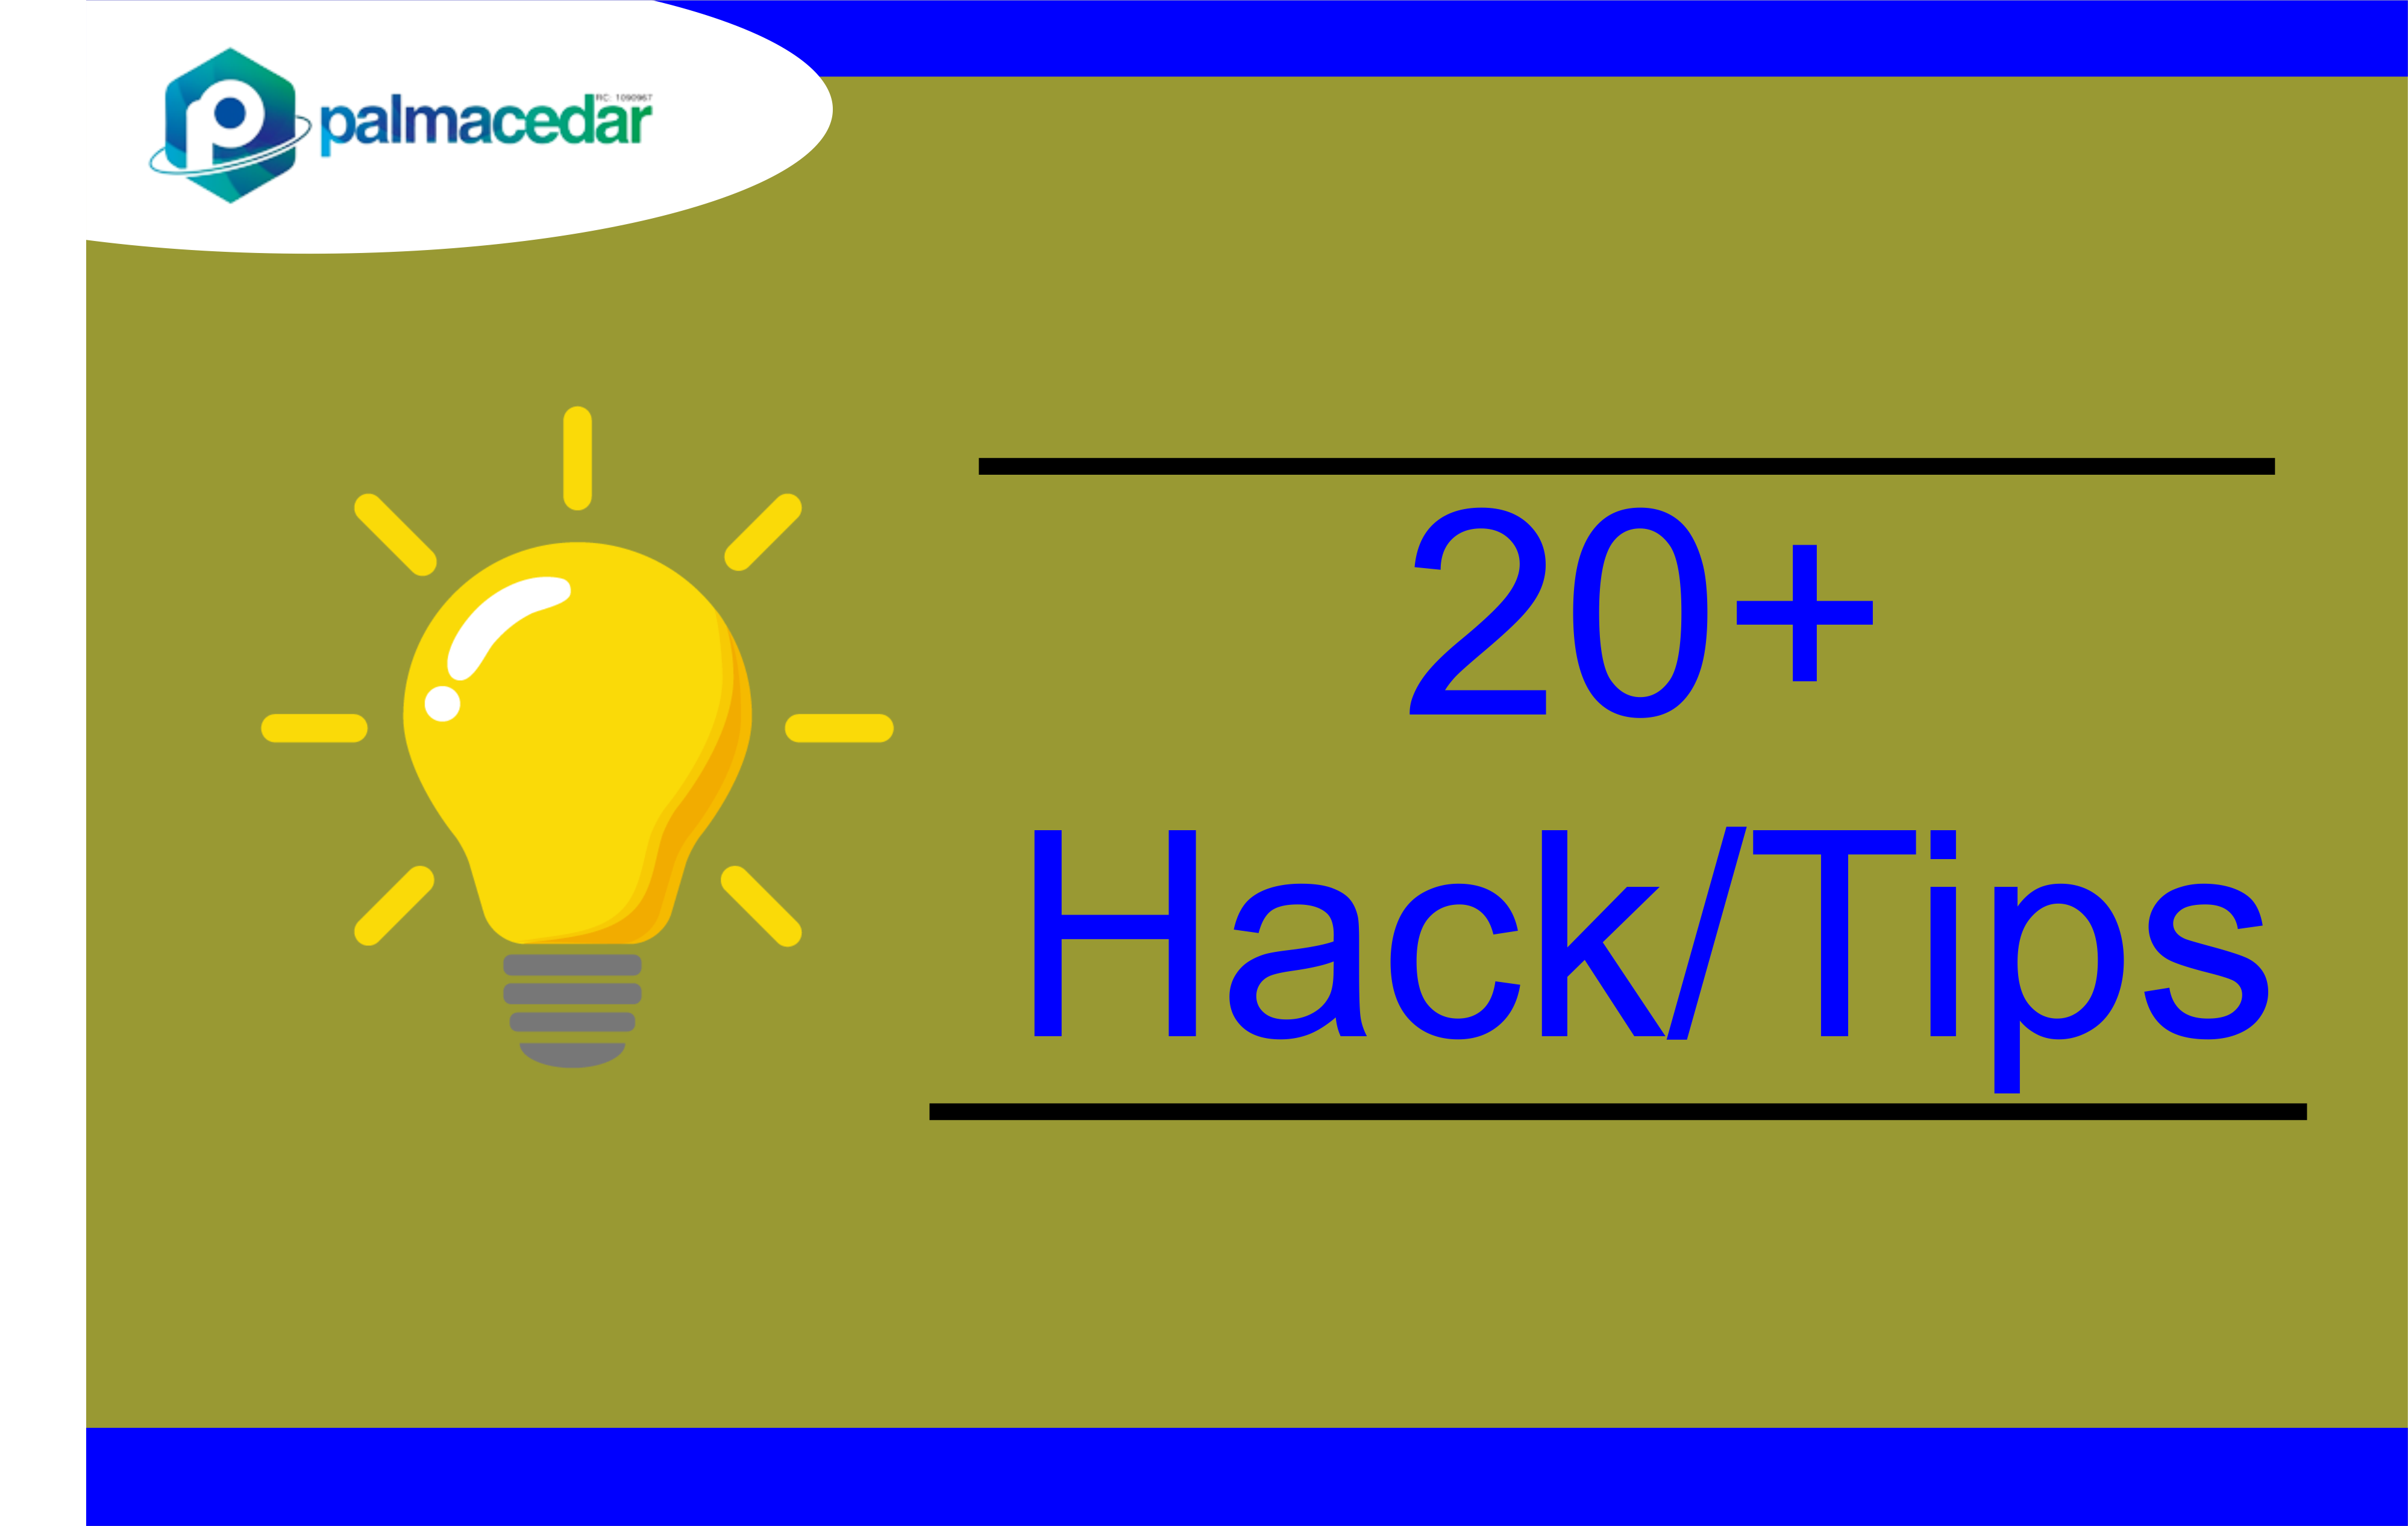 20+ Hack & Tips